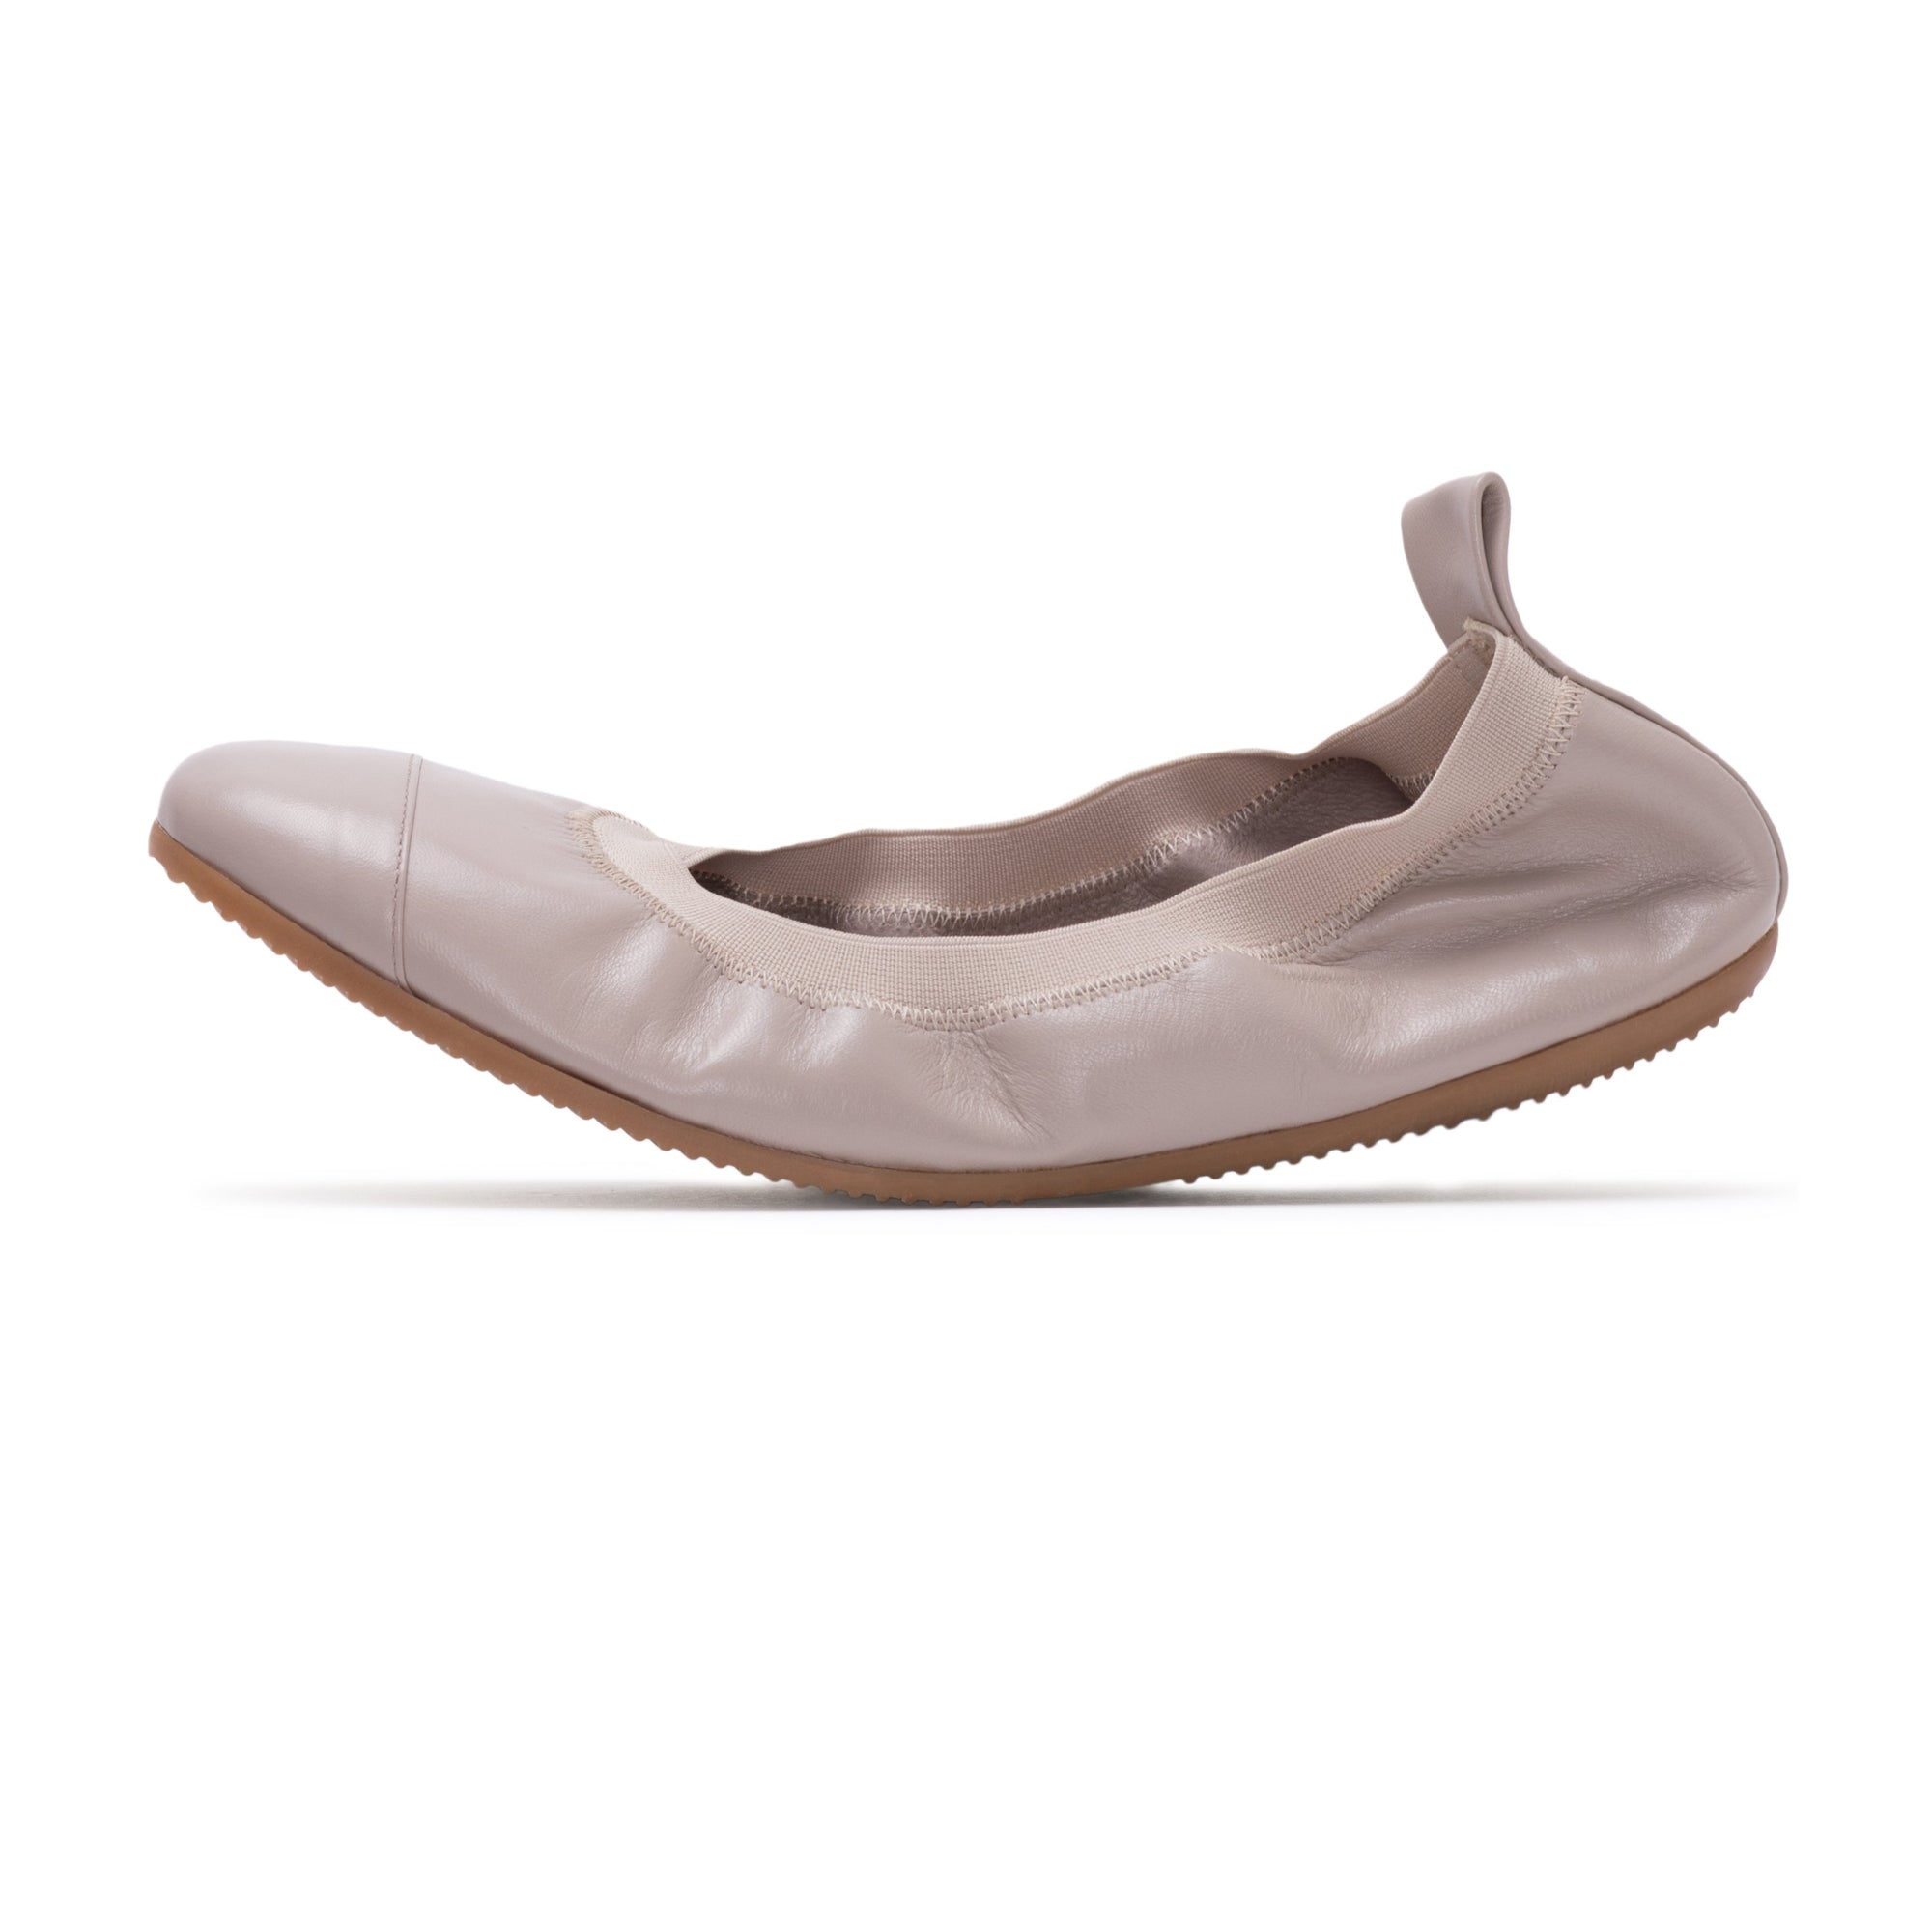 Handmade Italian Leather Ballet Flat - Cammino Shoes